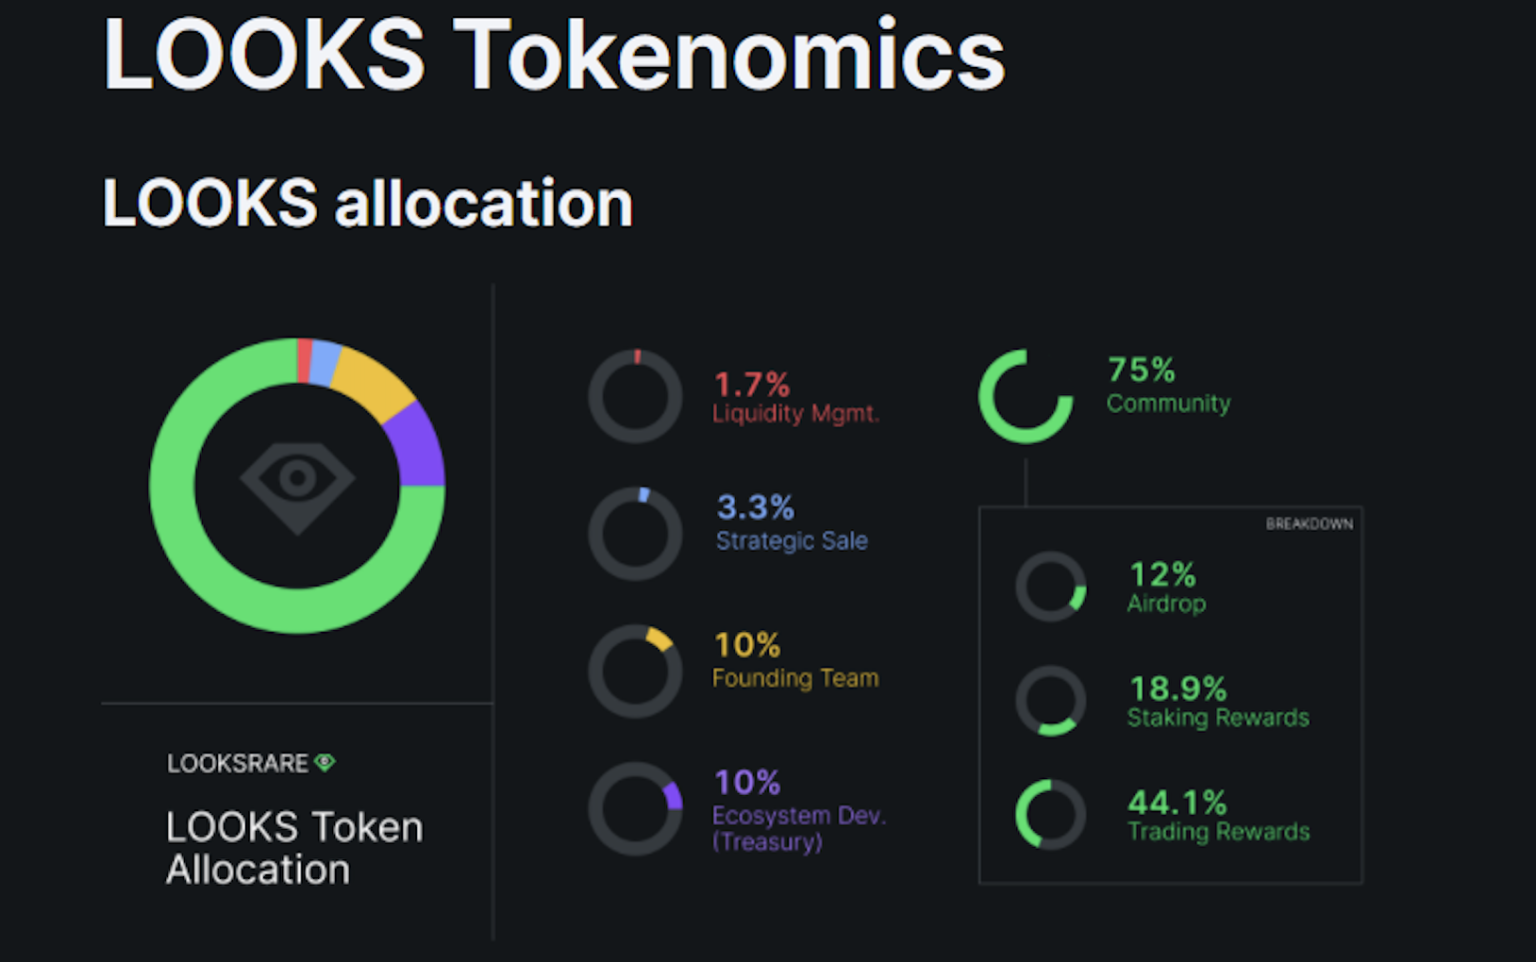 LOOKS token allocation breakdown